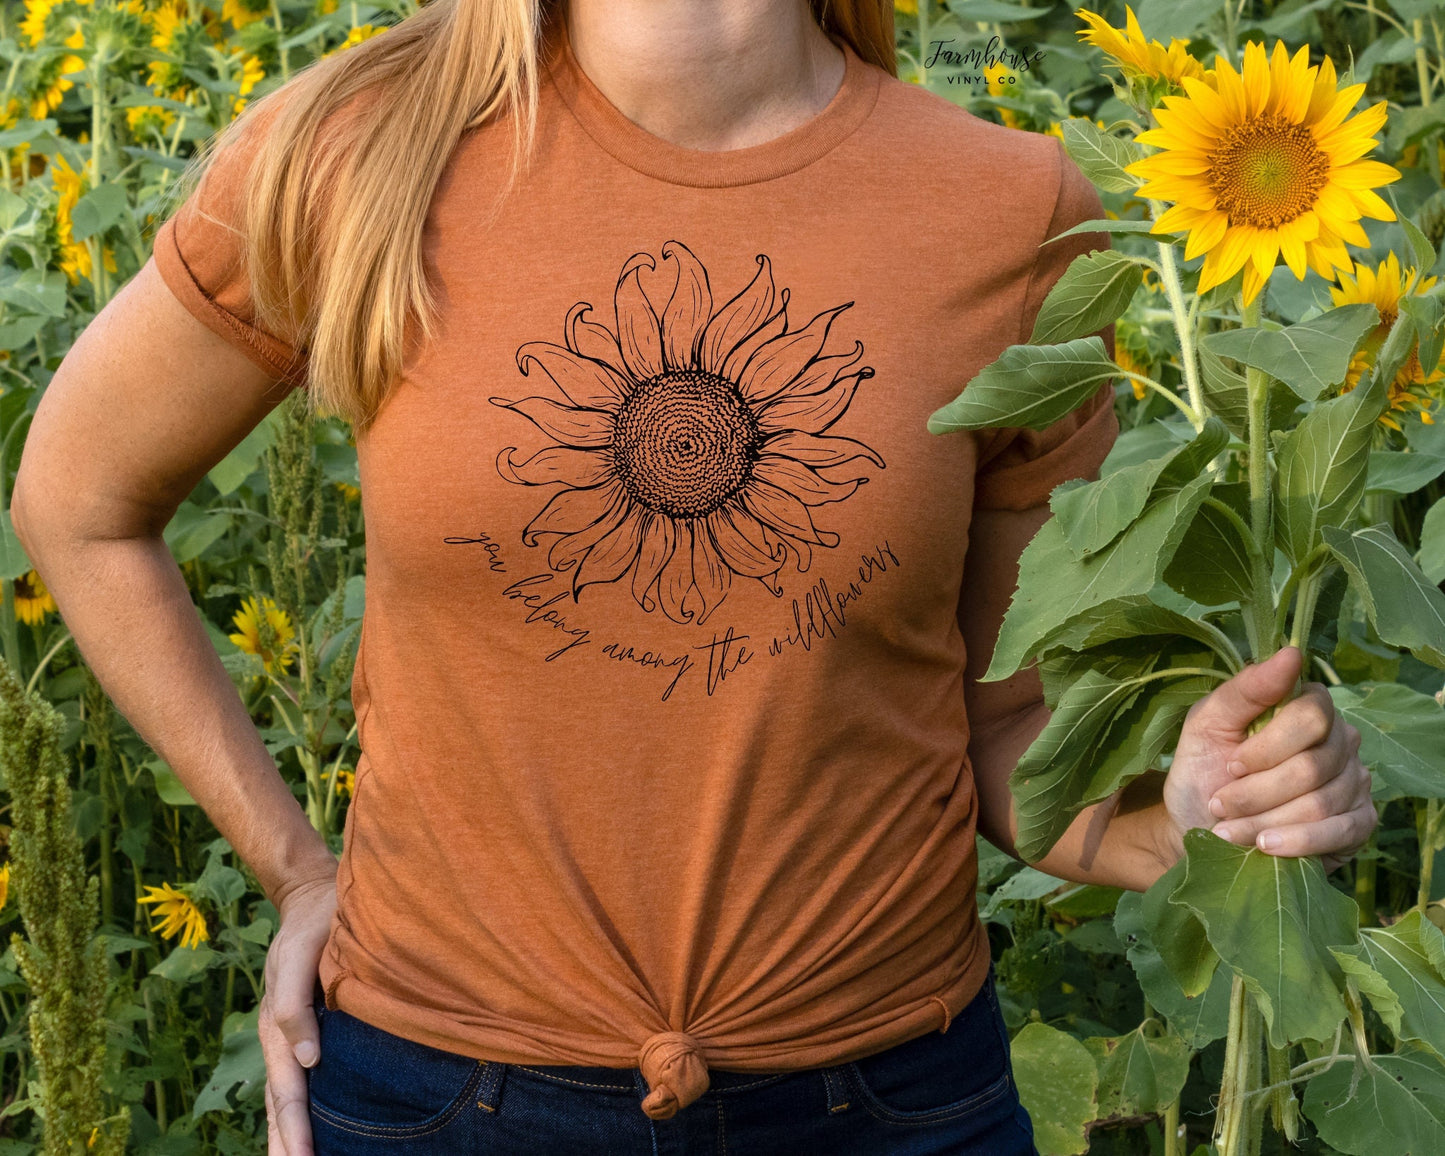 You Belong Among the Wildflowers Sunflower Shirt - Farmhouse Vinyl Co